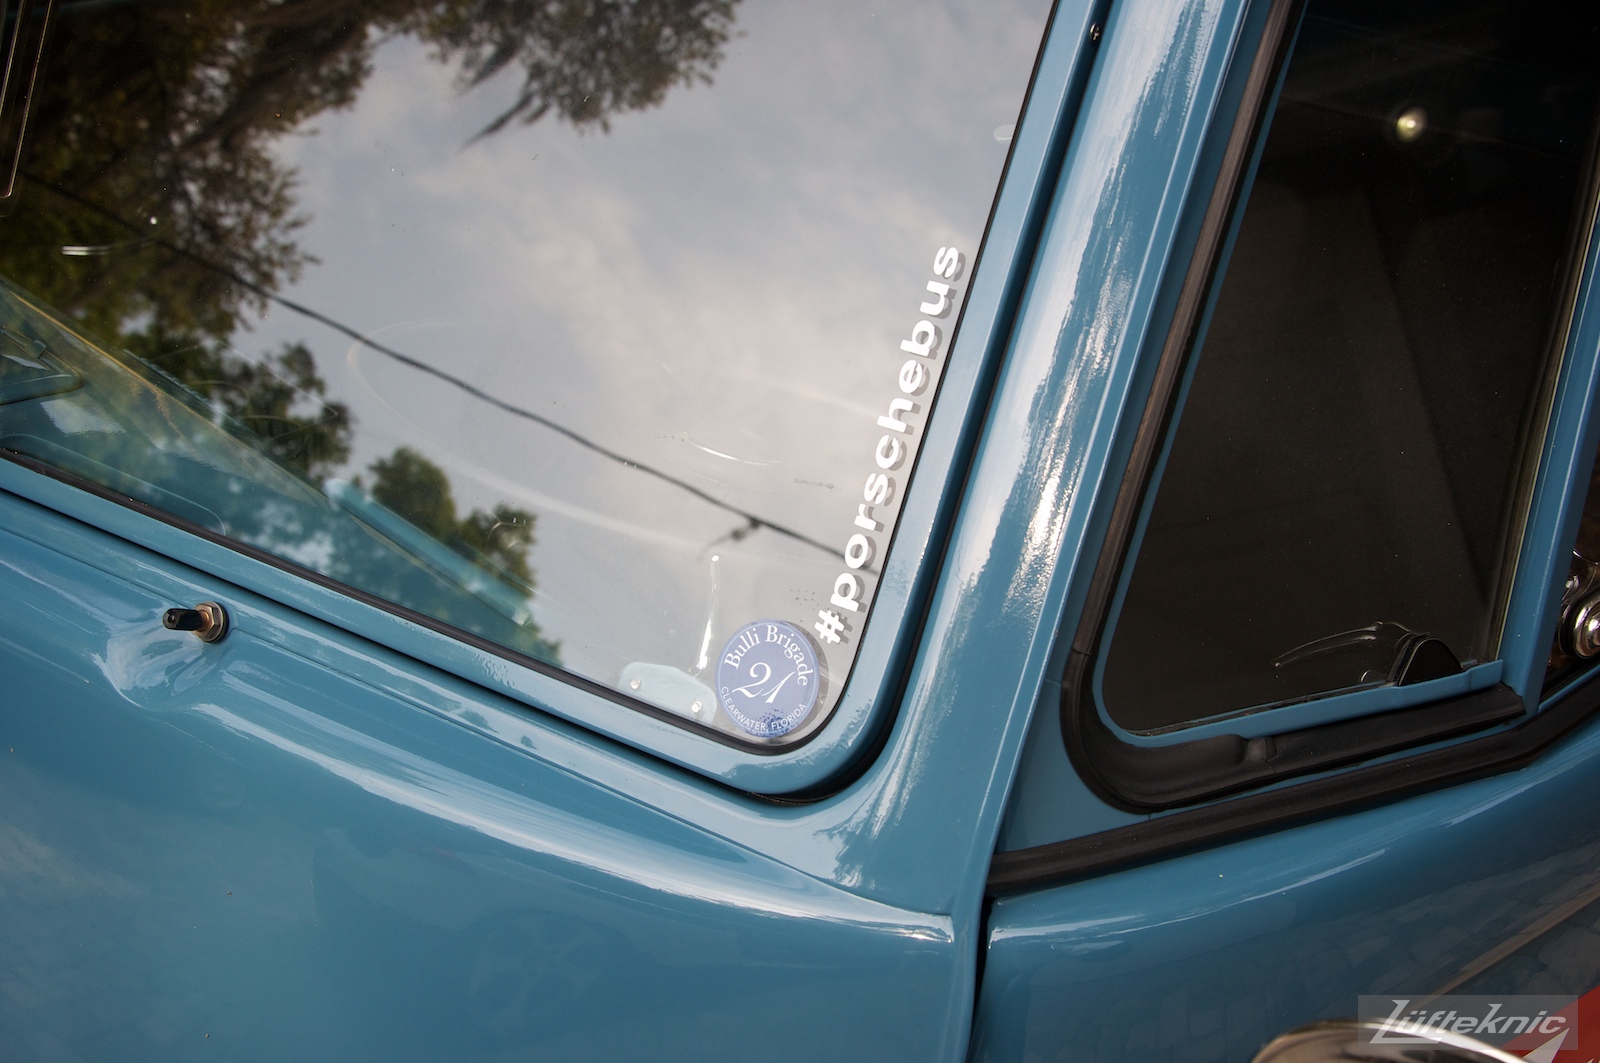 Dove Blue single cab VW Transporter with Lufteknic graphics.